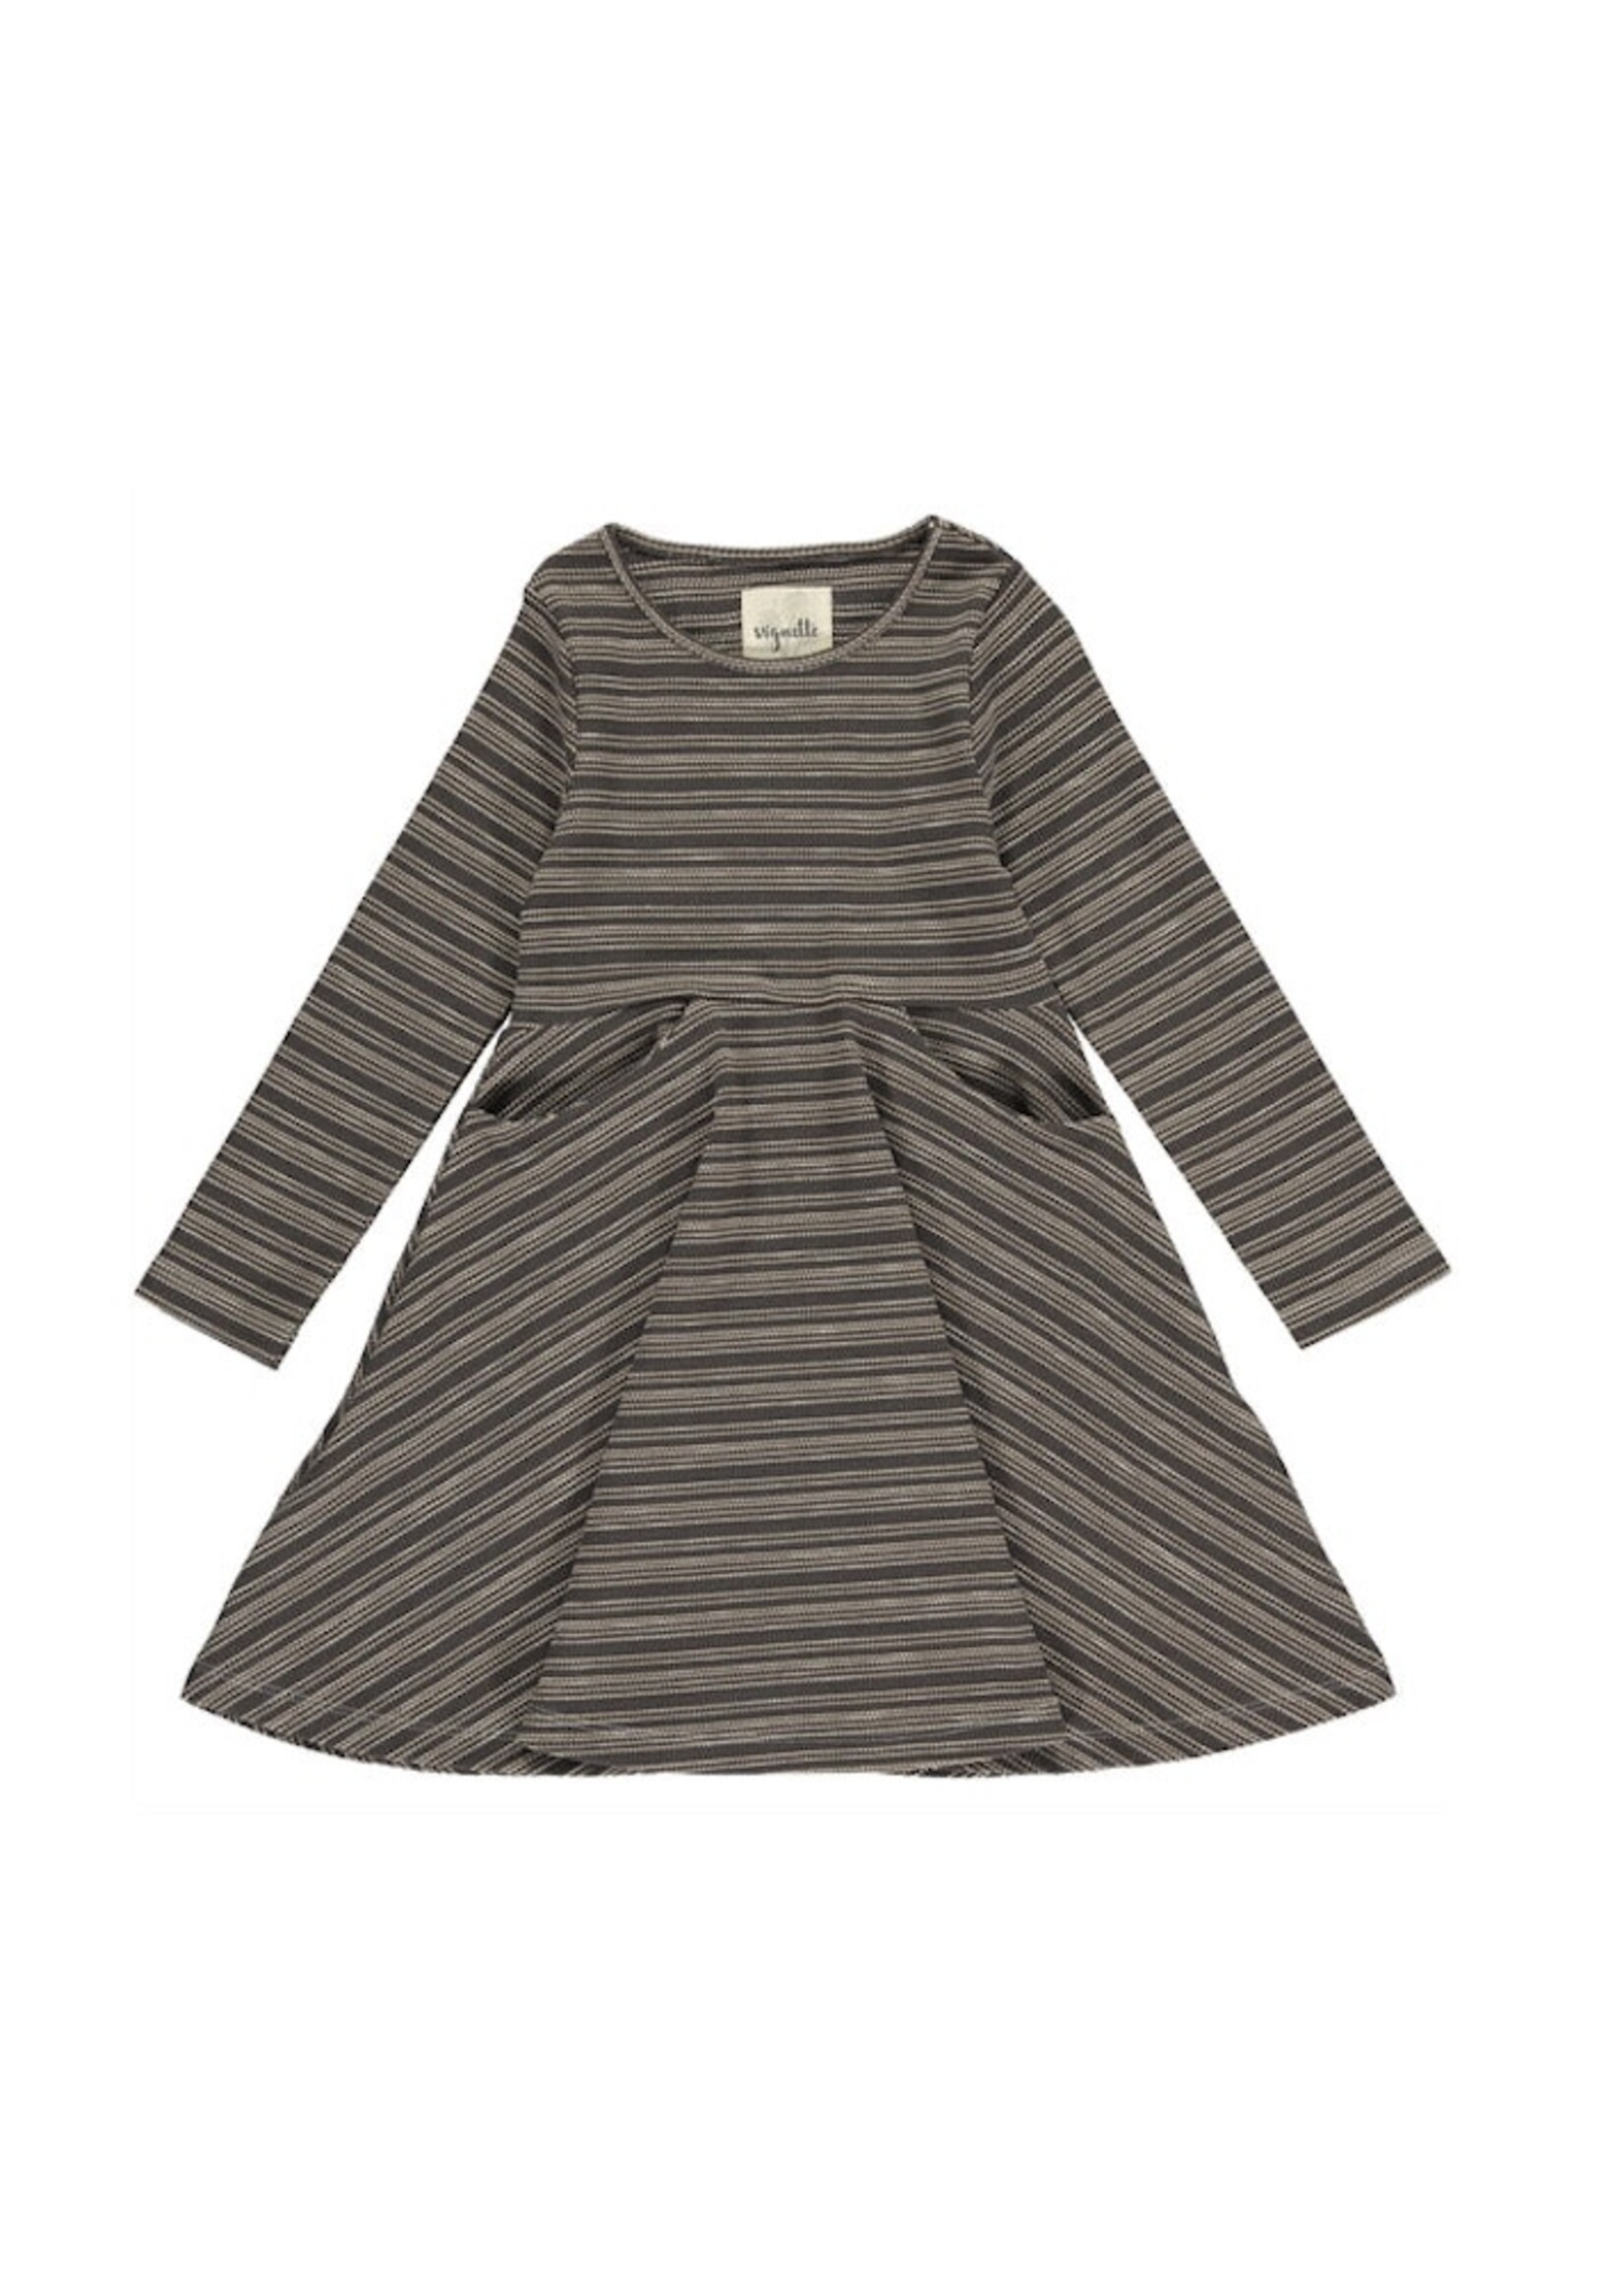 Vignette Vignette, Merilee Dress || Brown Cream Stripe